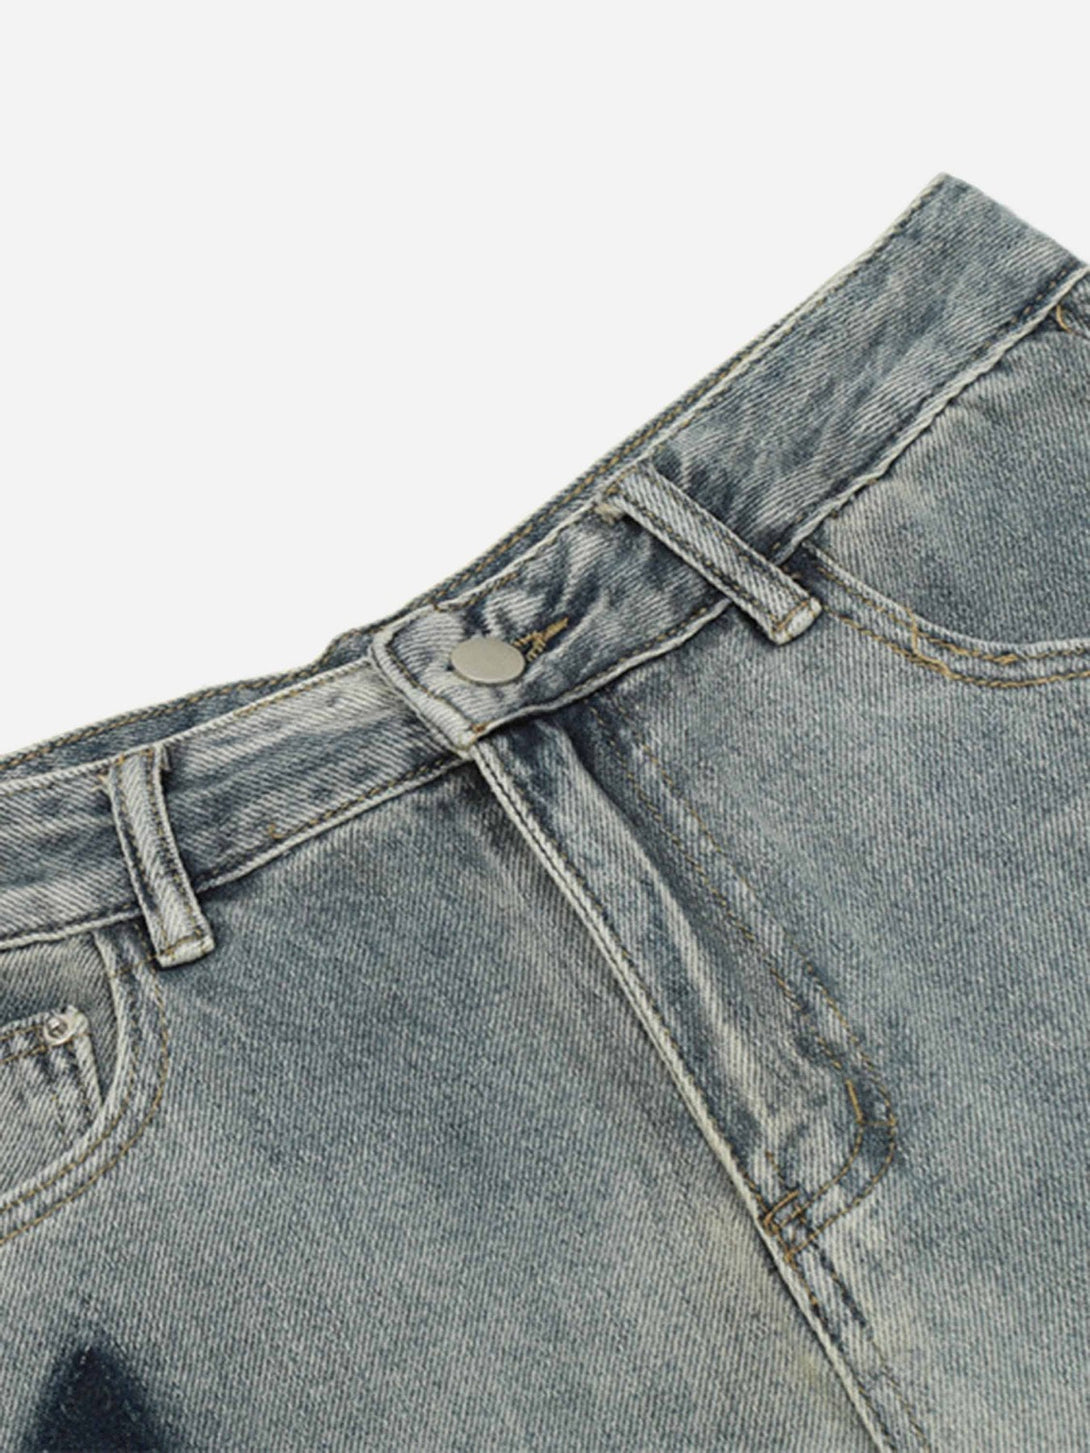 Majesda® - Airbrushed Pentagram Applique Jeans - 1656- Outfit Ideas - Streetwear Fashion - majesda.com